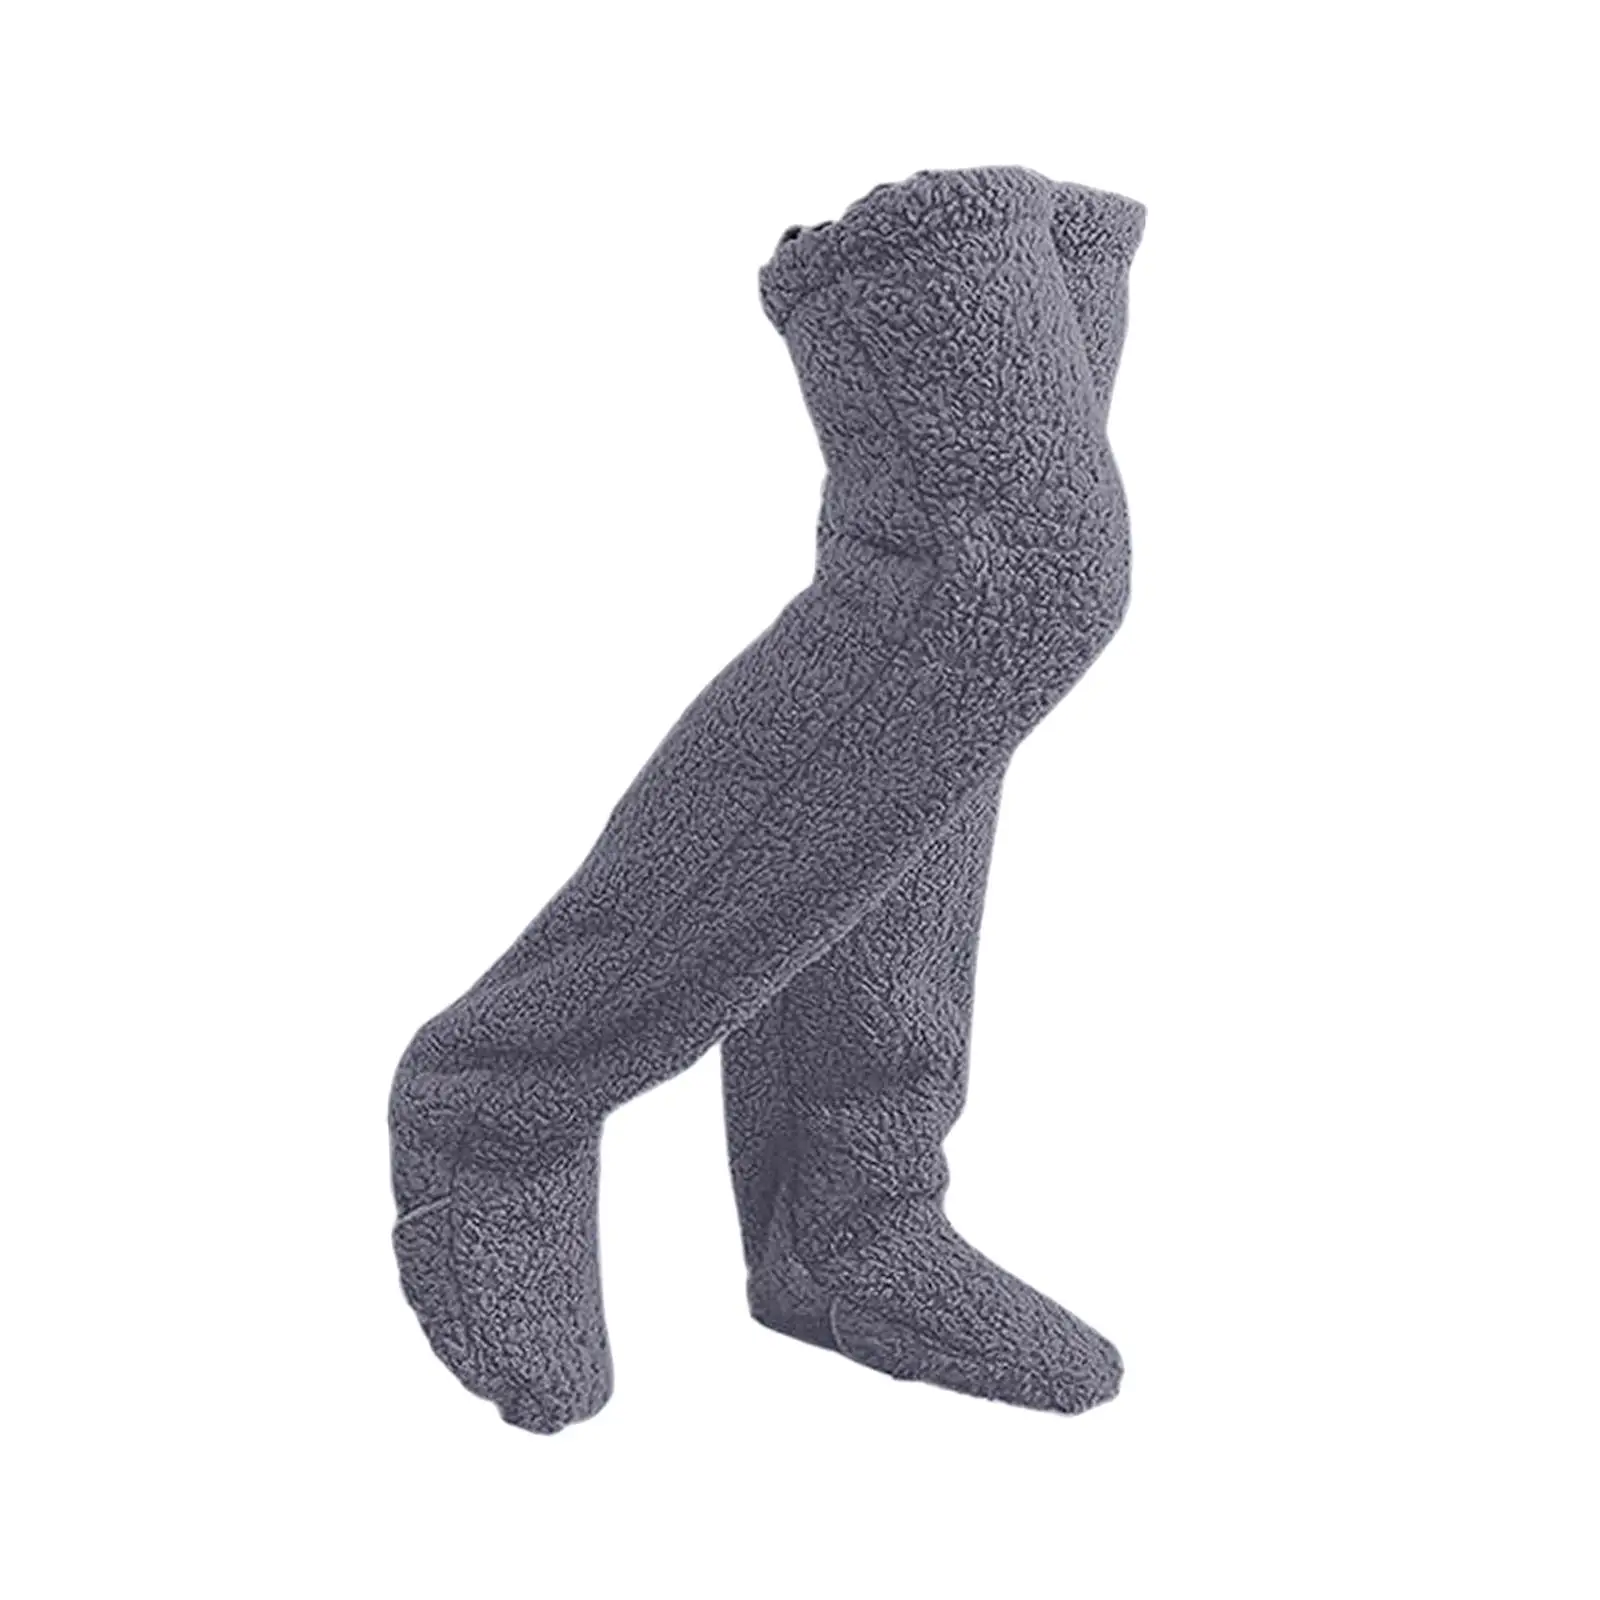 Thigh High Socks Winter Home Sleeping Socks Soft Foot Wrap Plush Leg Warmers